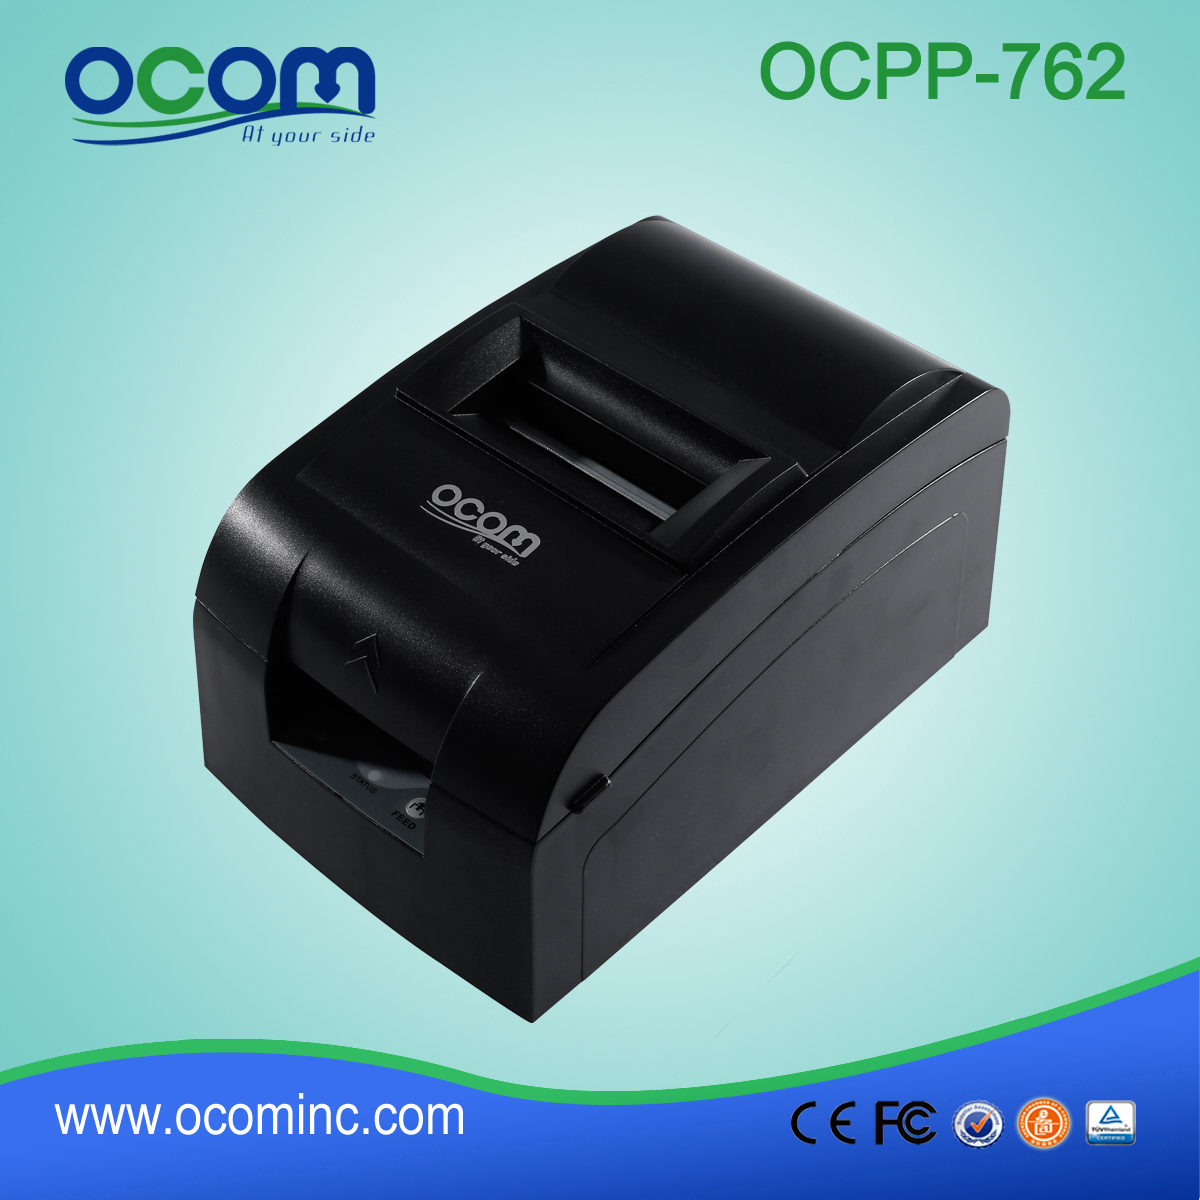 76mm Impact dot matrix receipt printer with manual cutter OCPP-762-U